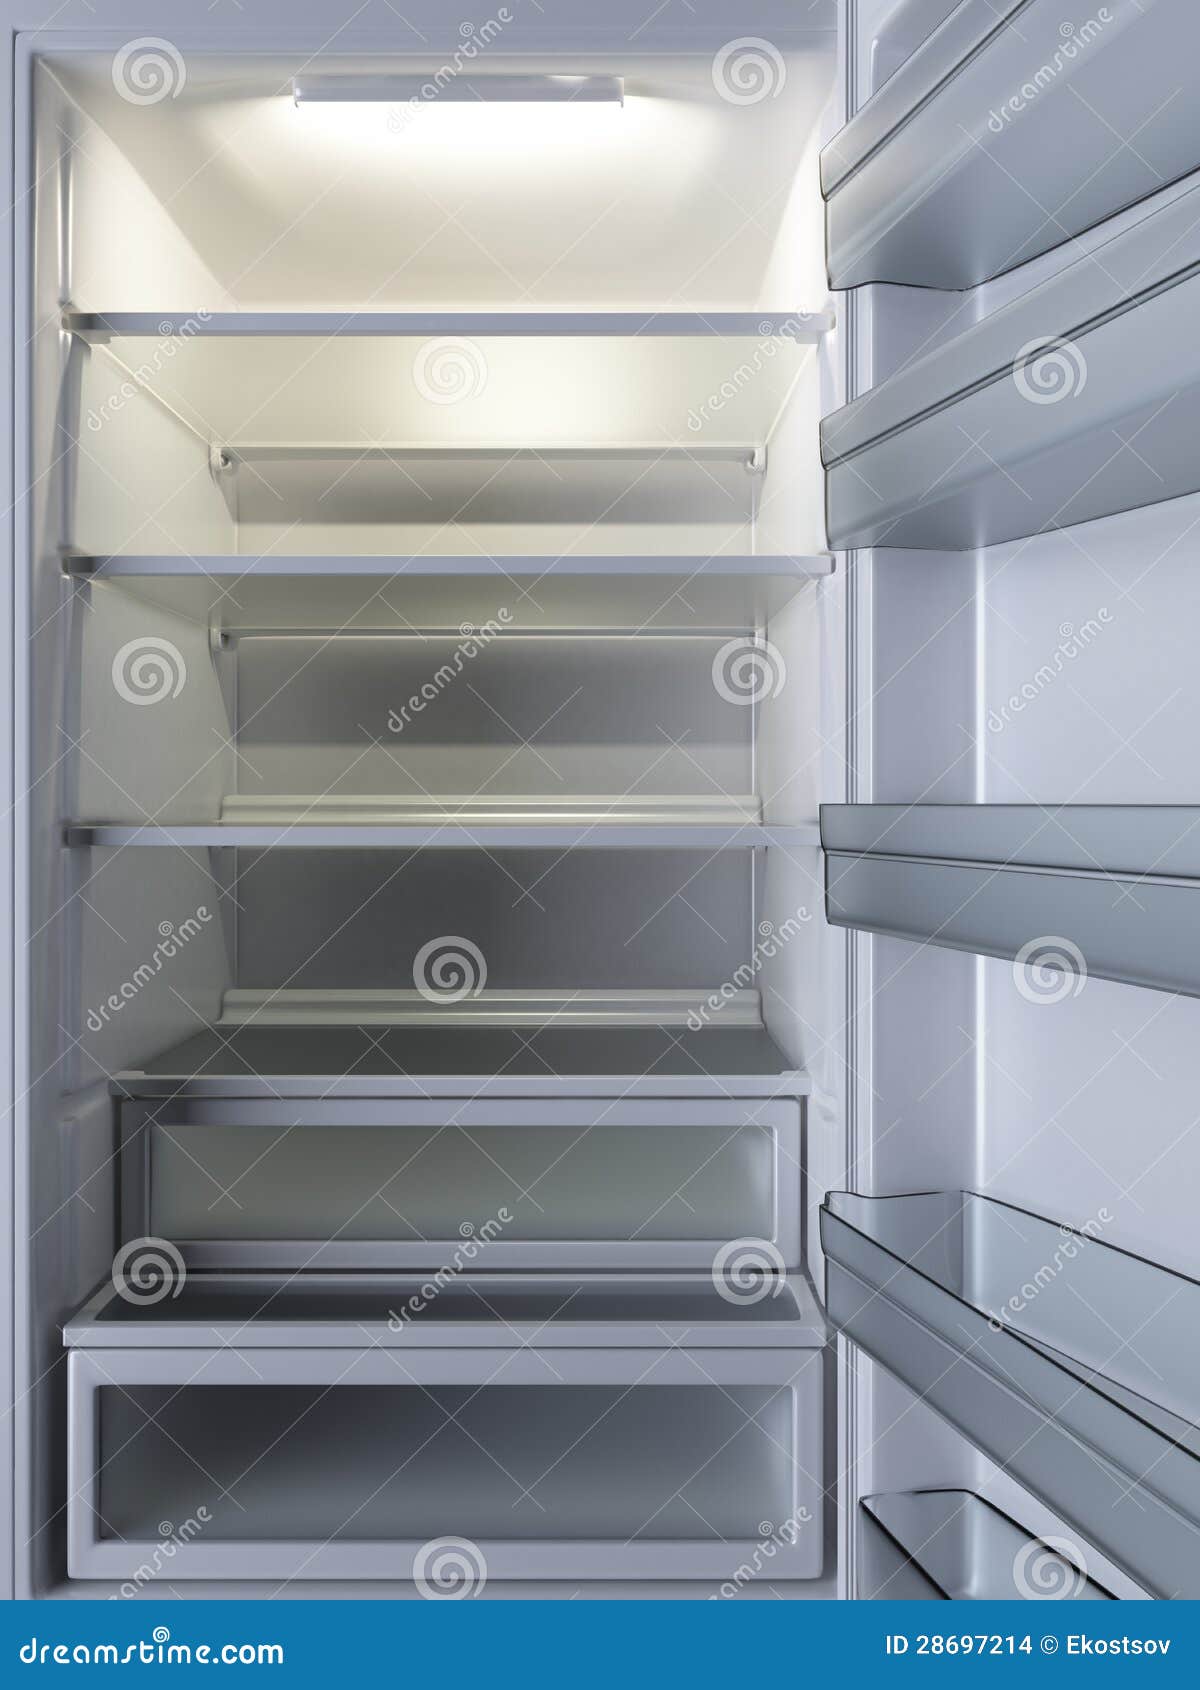 Empty Refrigerator. Stock Images - Image: 28697214